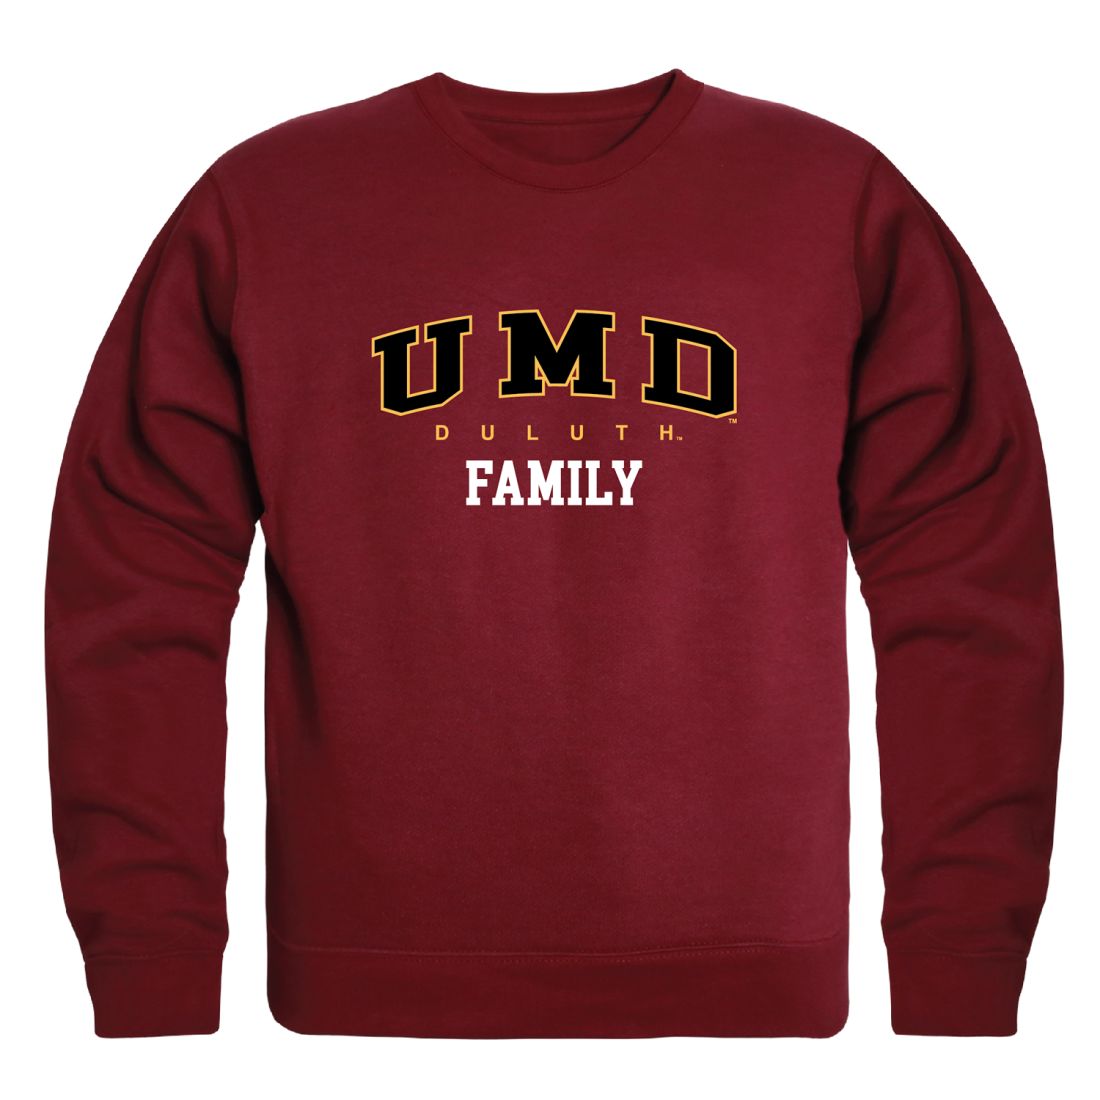 UMD-University-of-Minnesota-Duluth-Bulldogs-Family-Fleece-Crewneck-Pullover-Sweatshirt